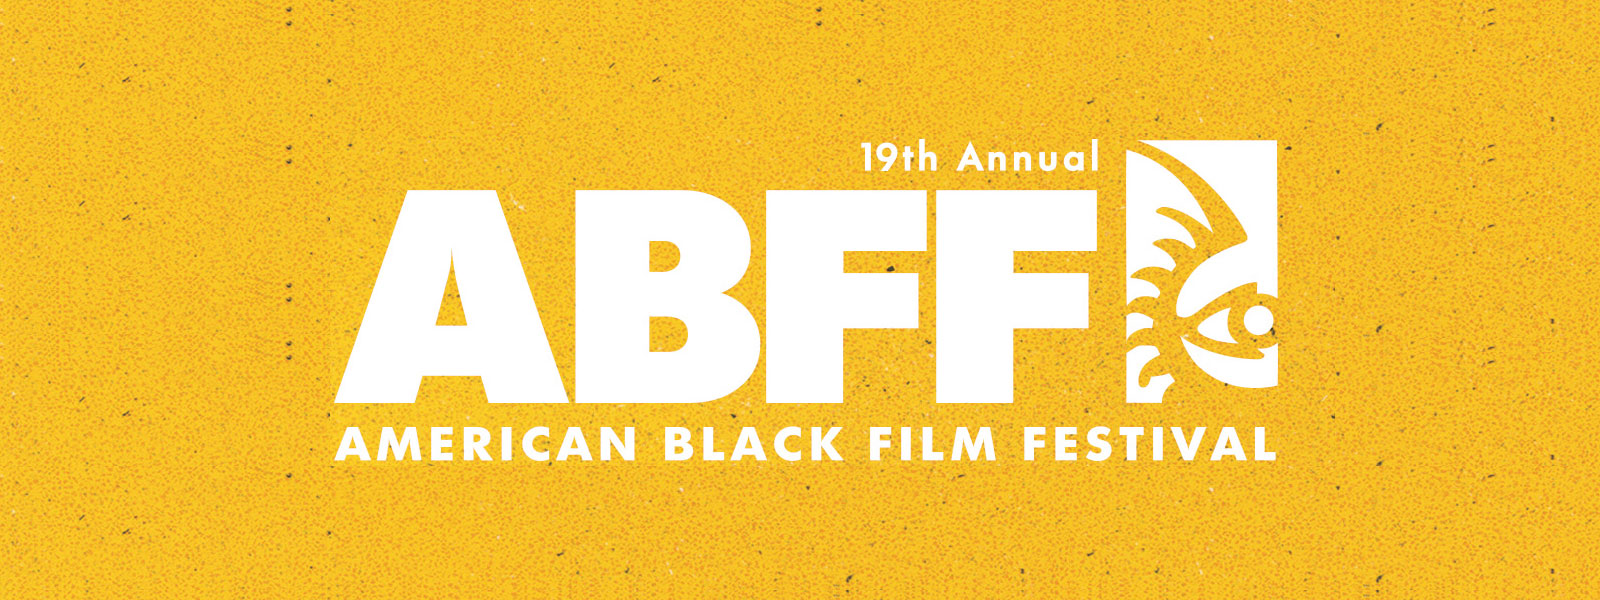 ABFF-19th-Annual logo.jpg